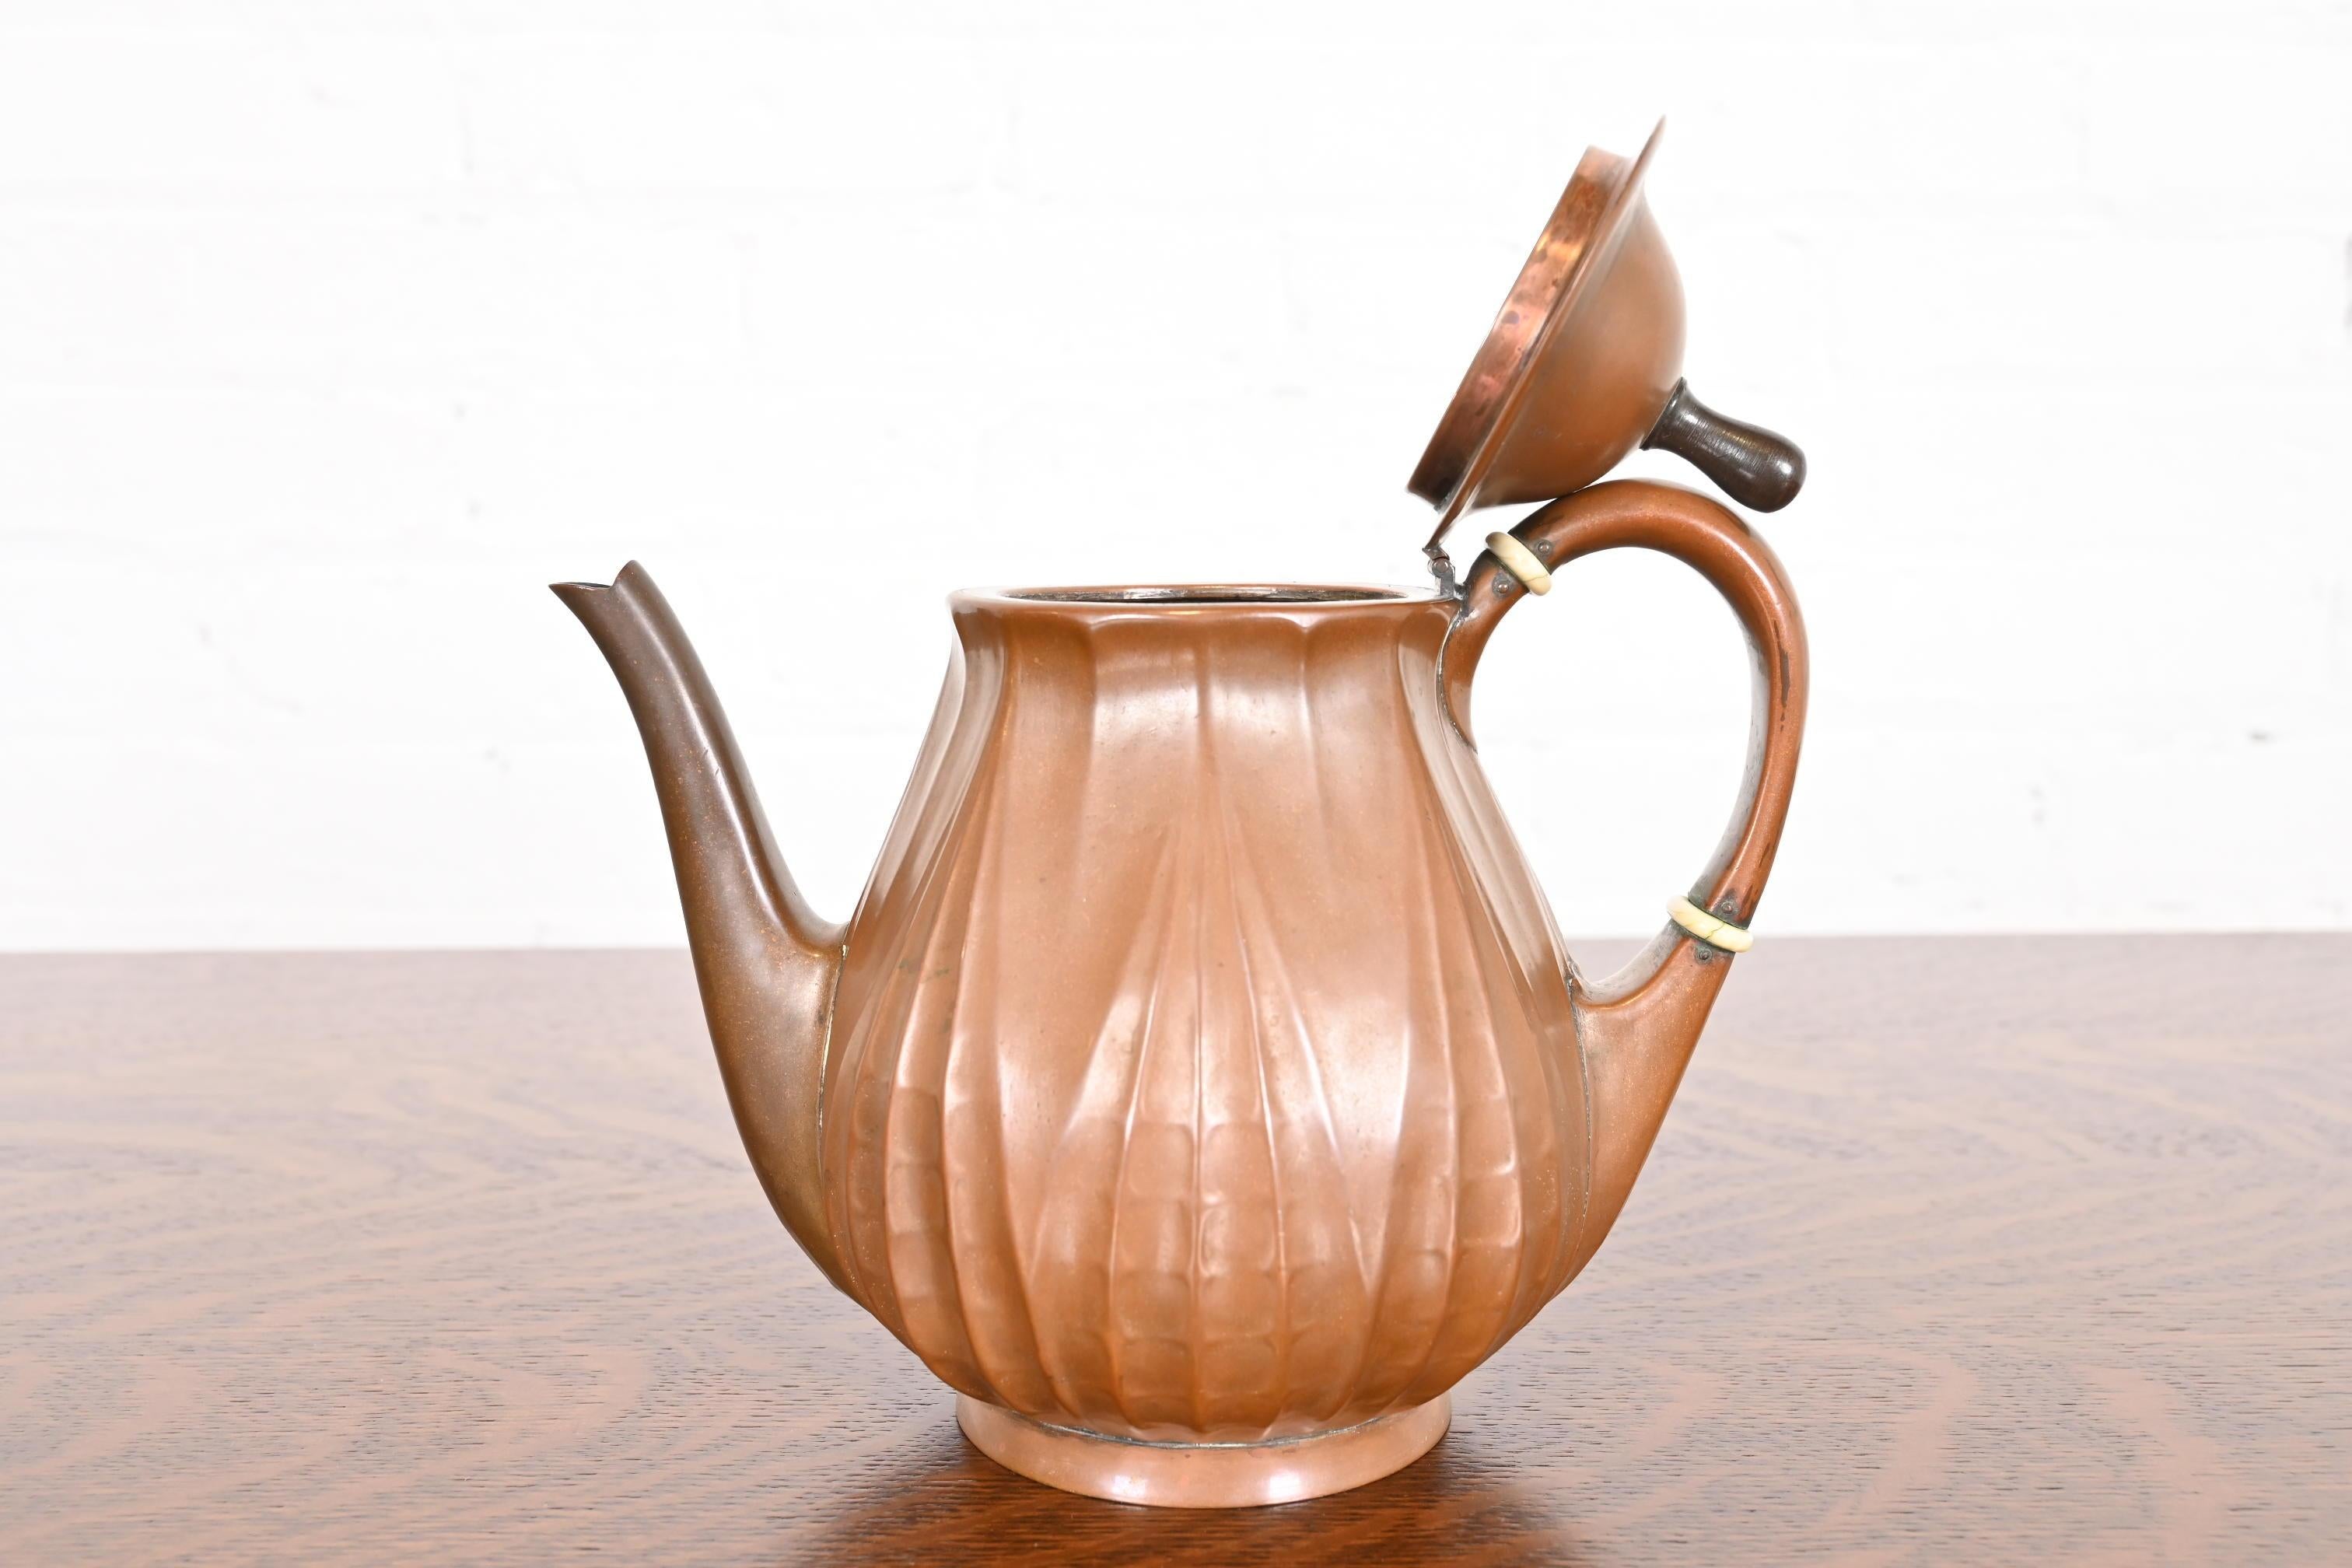 Tiffany Studios New York Arts & Crafts Copper Tea Kettle, Circa 1910 For Sale 3